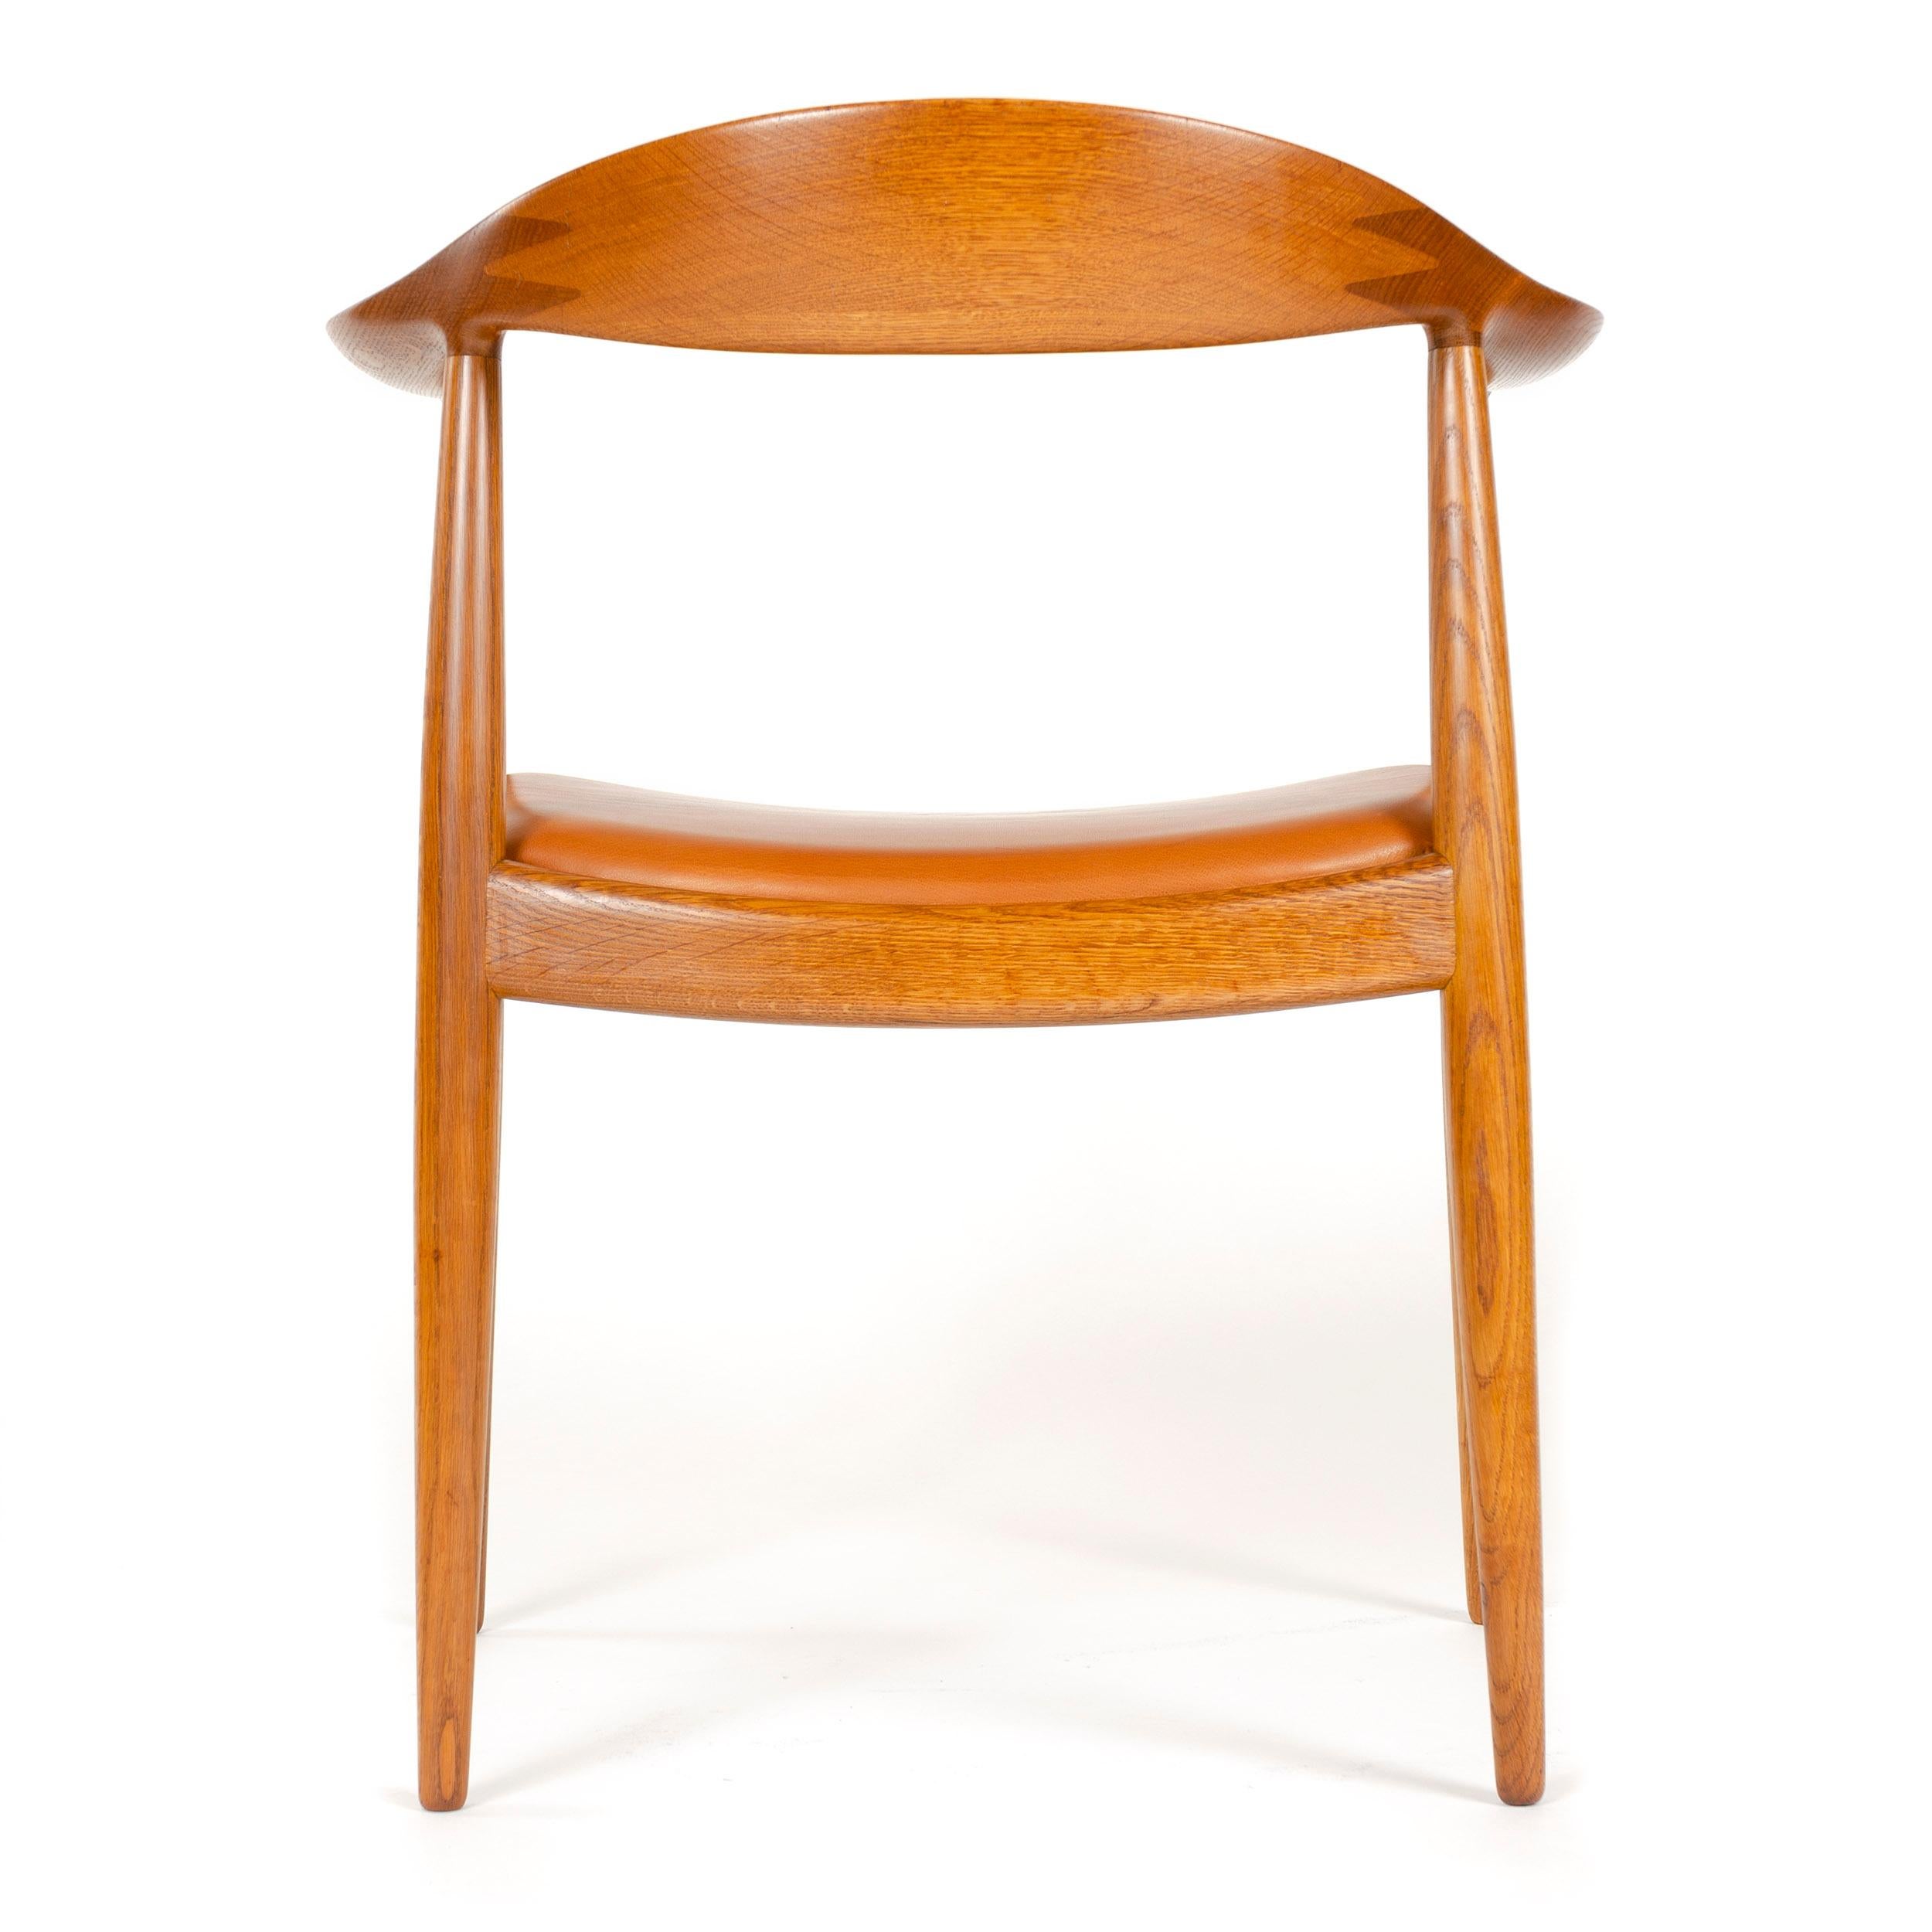 Mid-20th Century 1950s Danish Oak Round Chair by Hans J. Wegner for Johannes Hansen